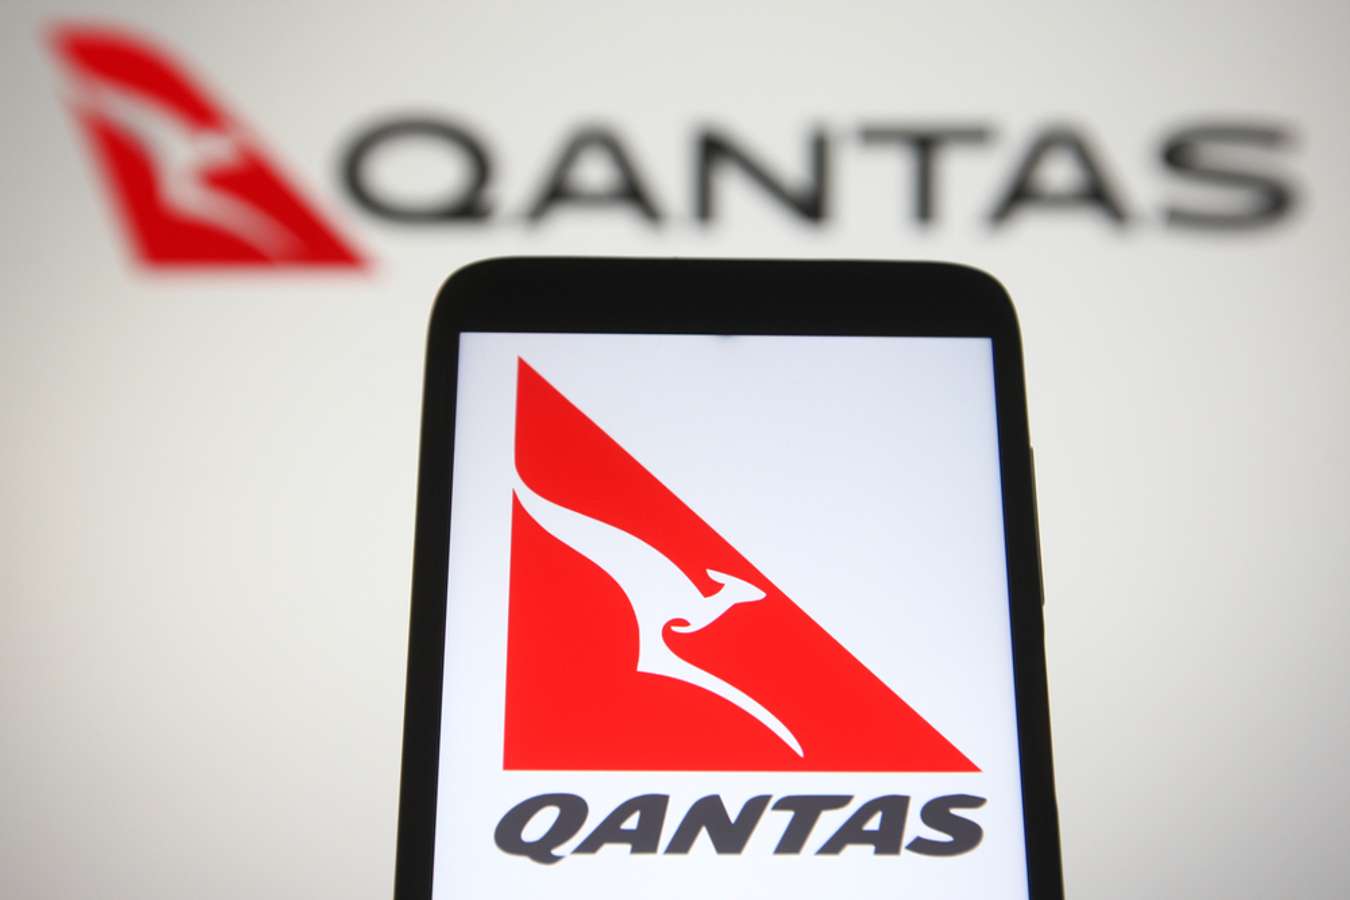 qantas travel booking